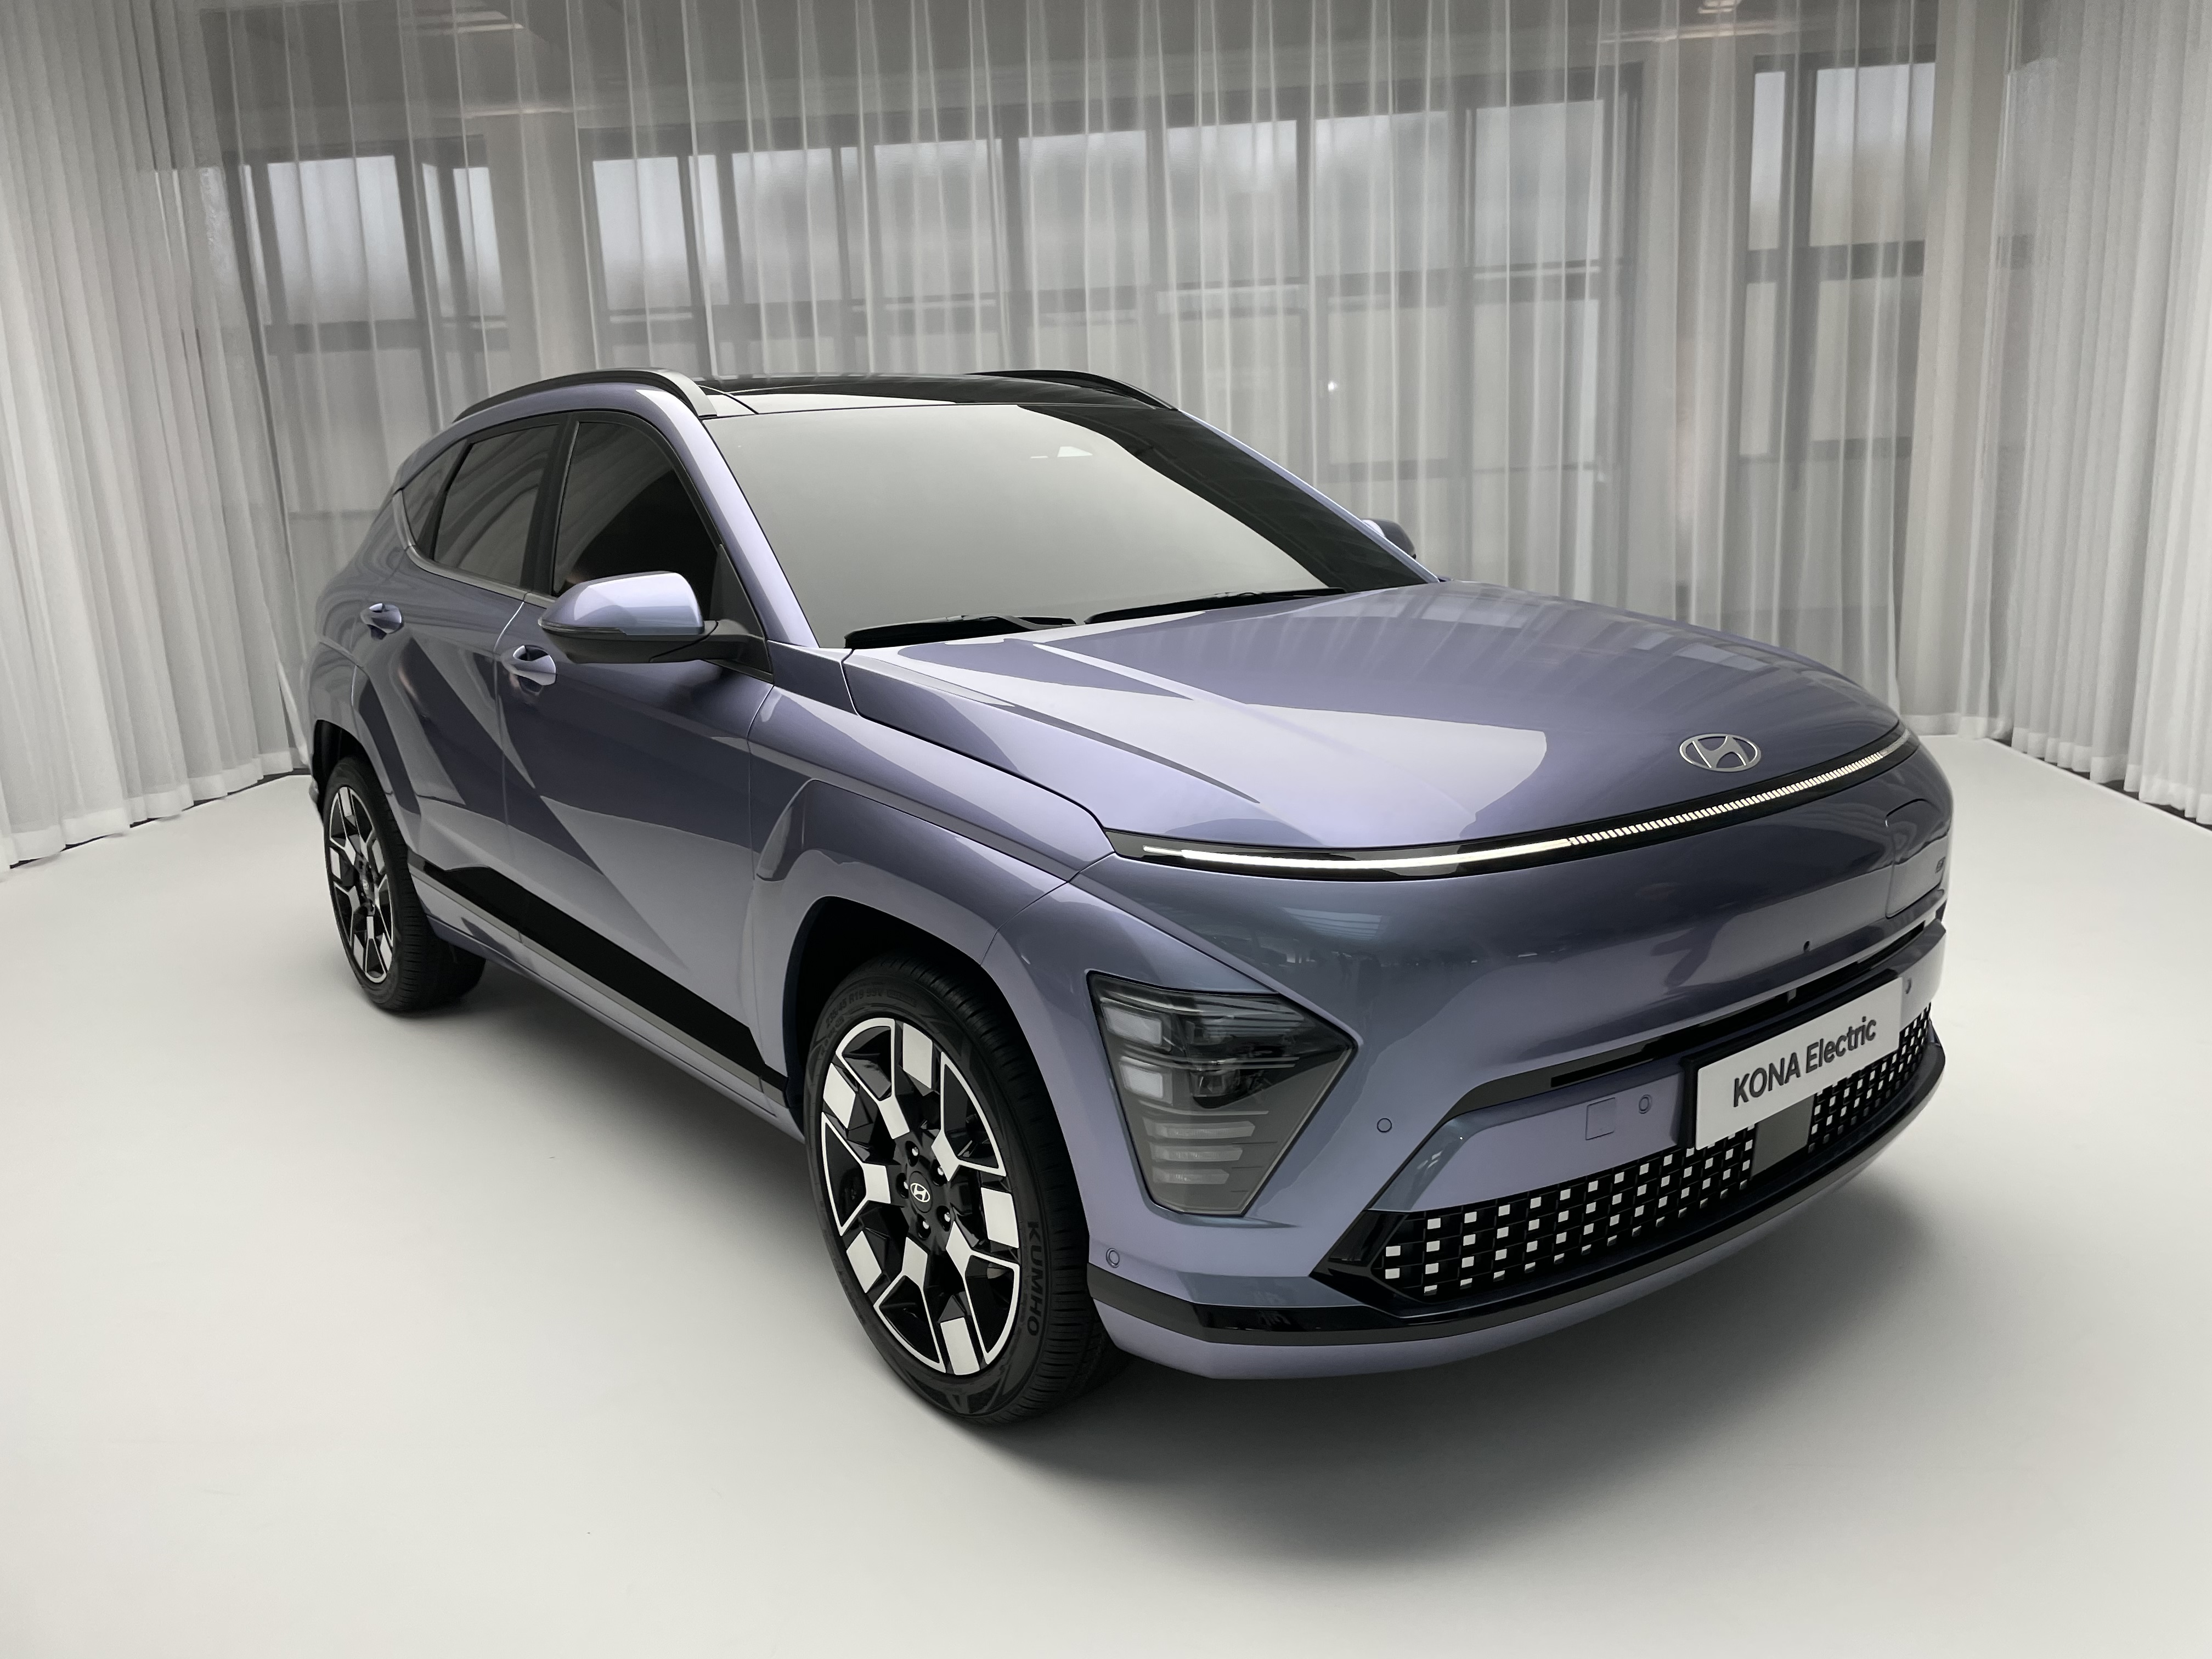 Review: Hyundai reveals larger EV and gas-powered Kona with sharp